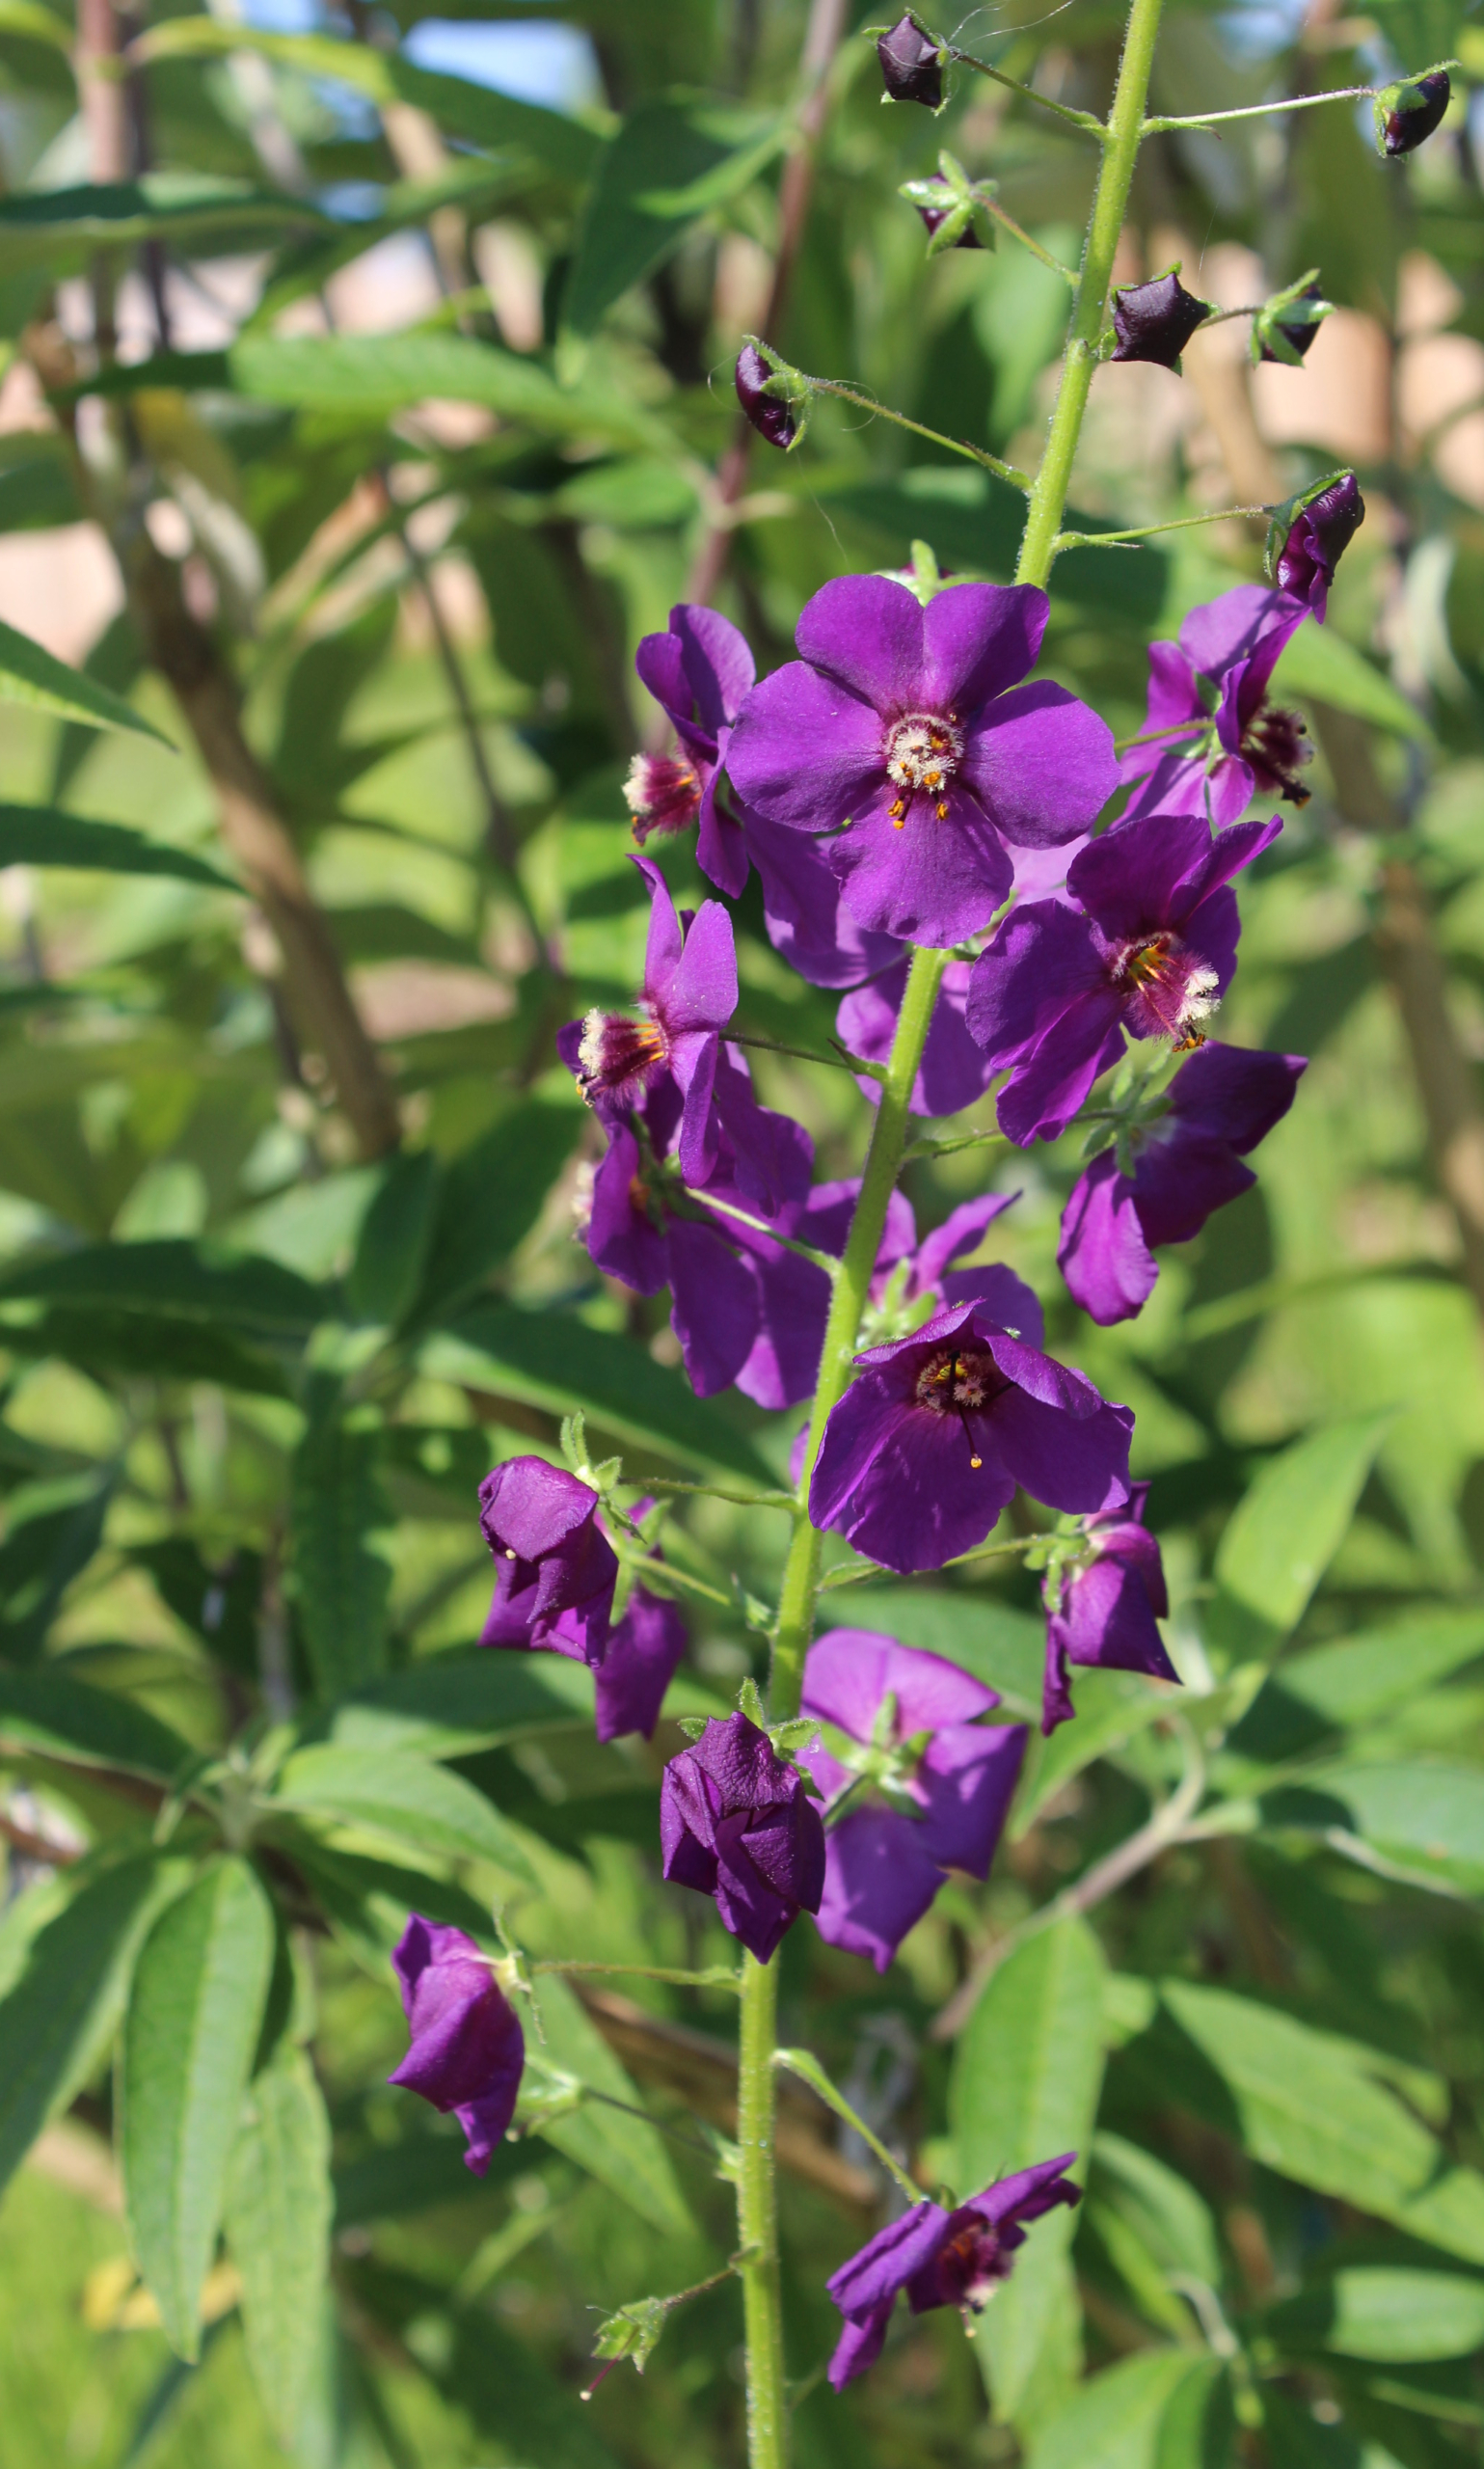 Violetta Flowers